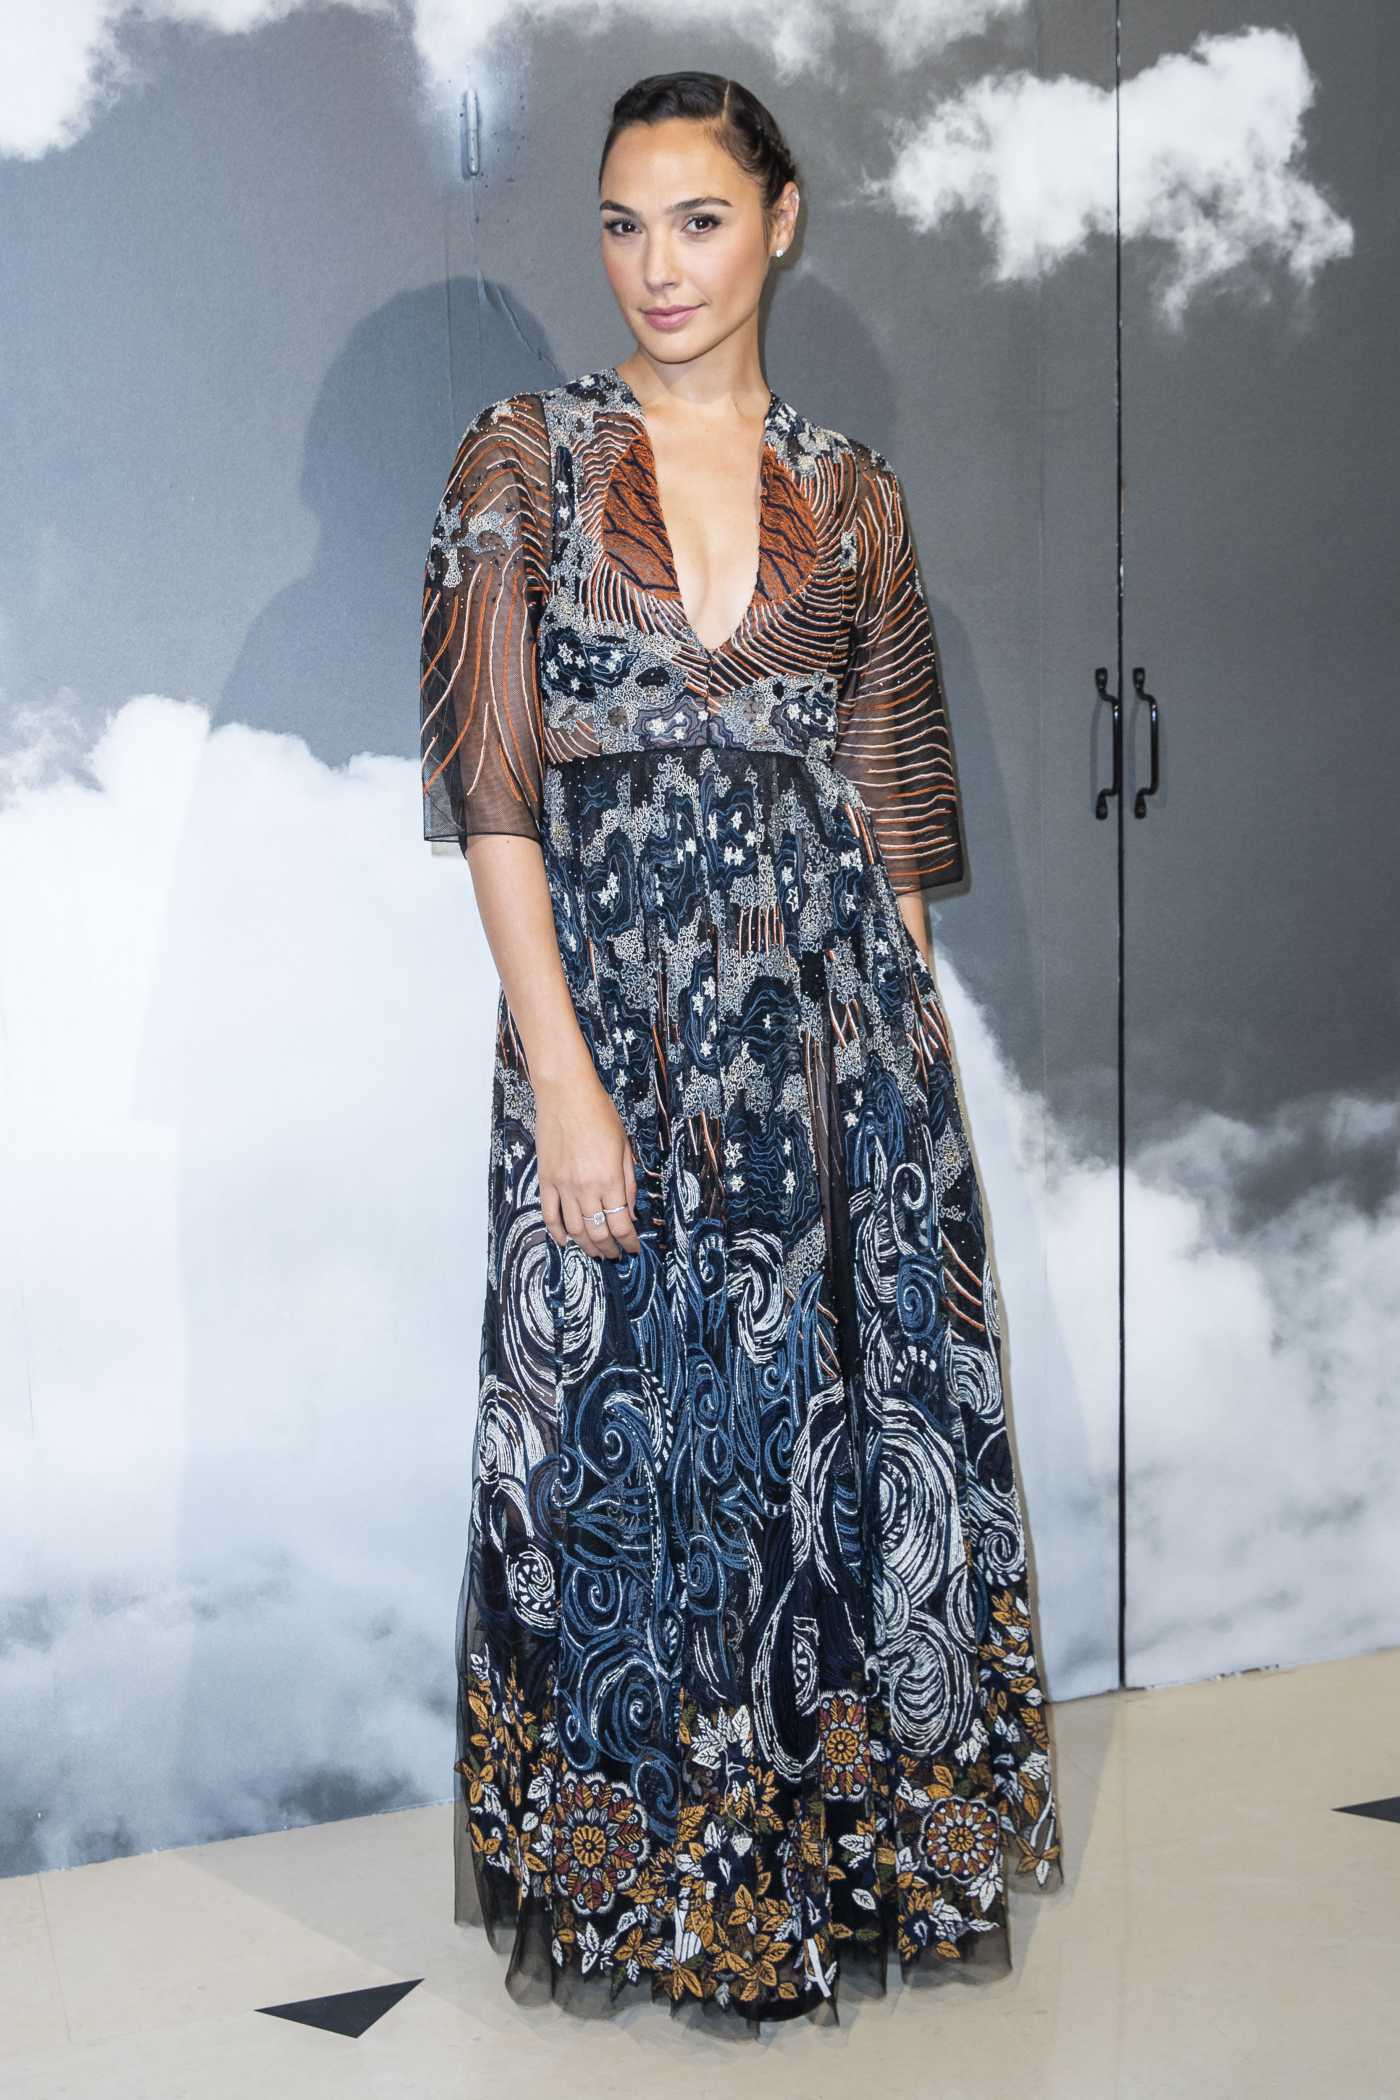 Gal Gadot Attends the Dior Show During 2019 Paris Fashion Week in Paris 07/01/2019